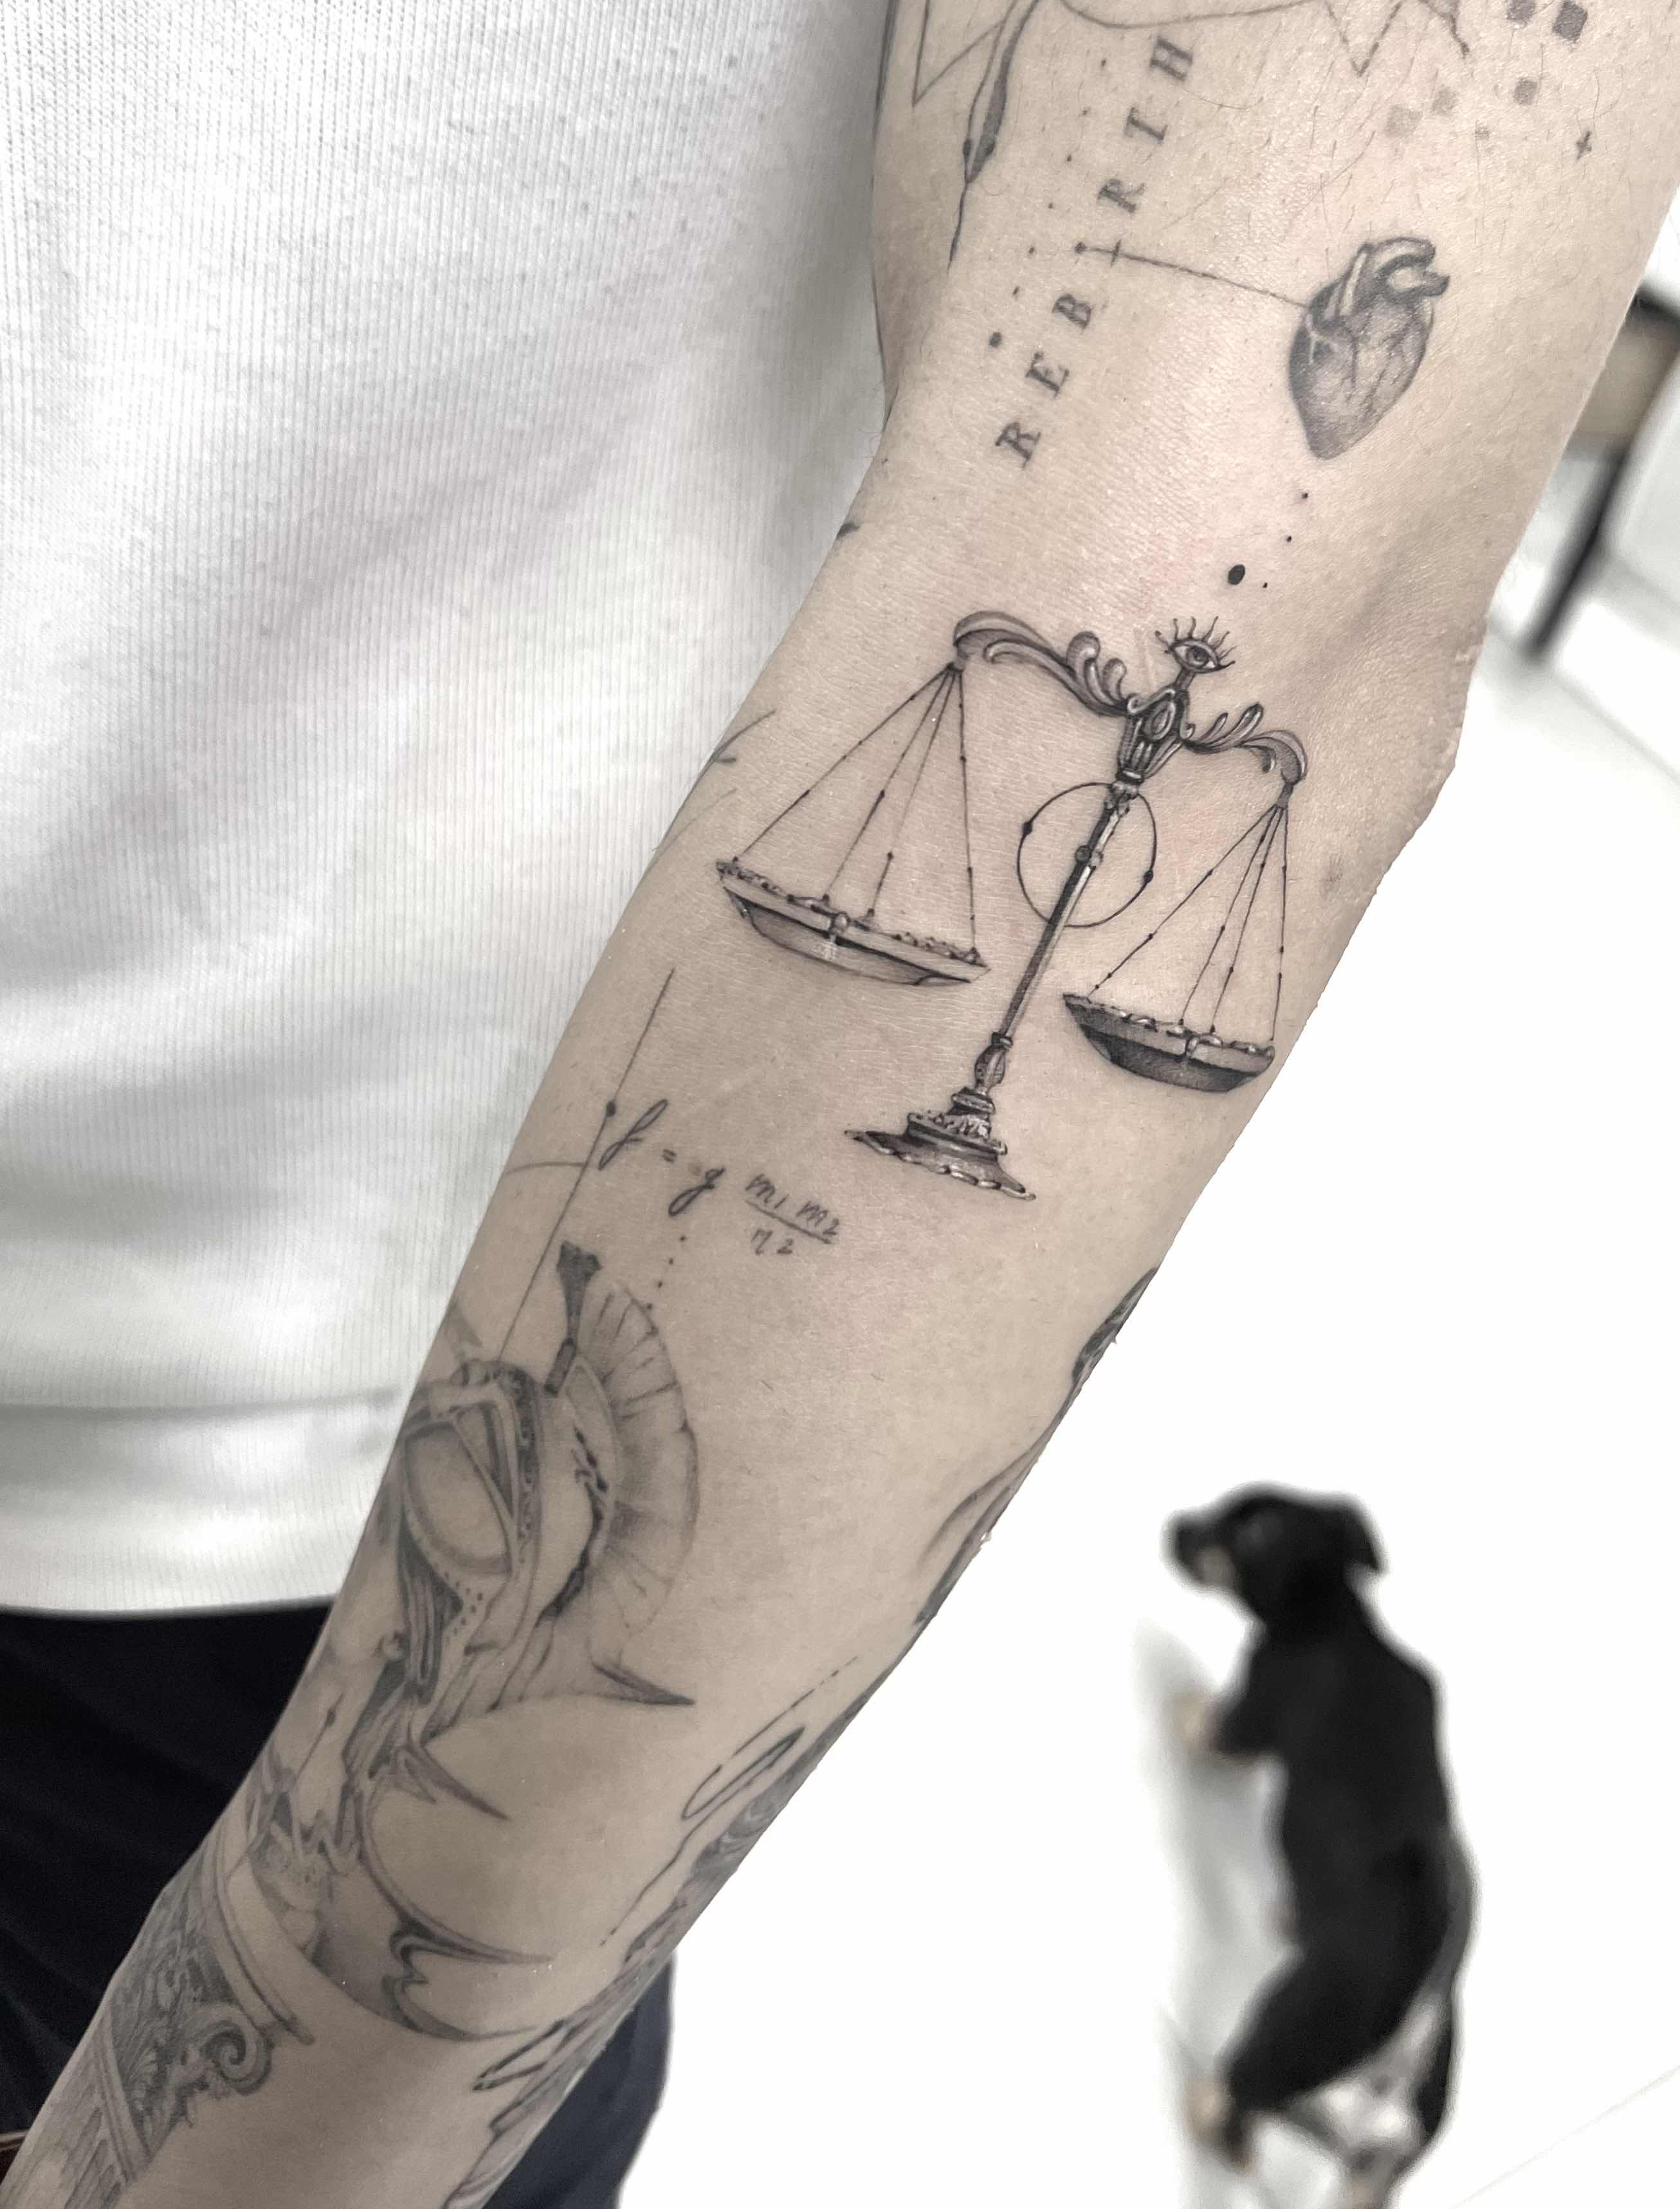 Justice delayed is justice denied  skinprovocateur tattoo  realistictattoo microrealism microrealismo swedentattoo  göteborgtattoo  Instagram